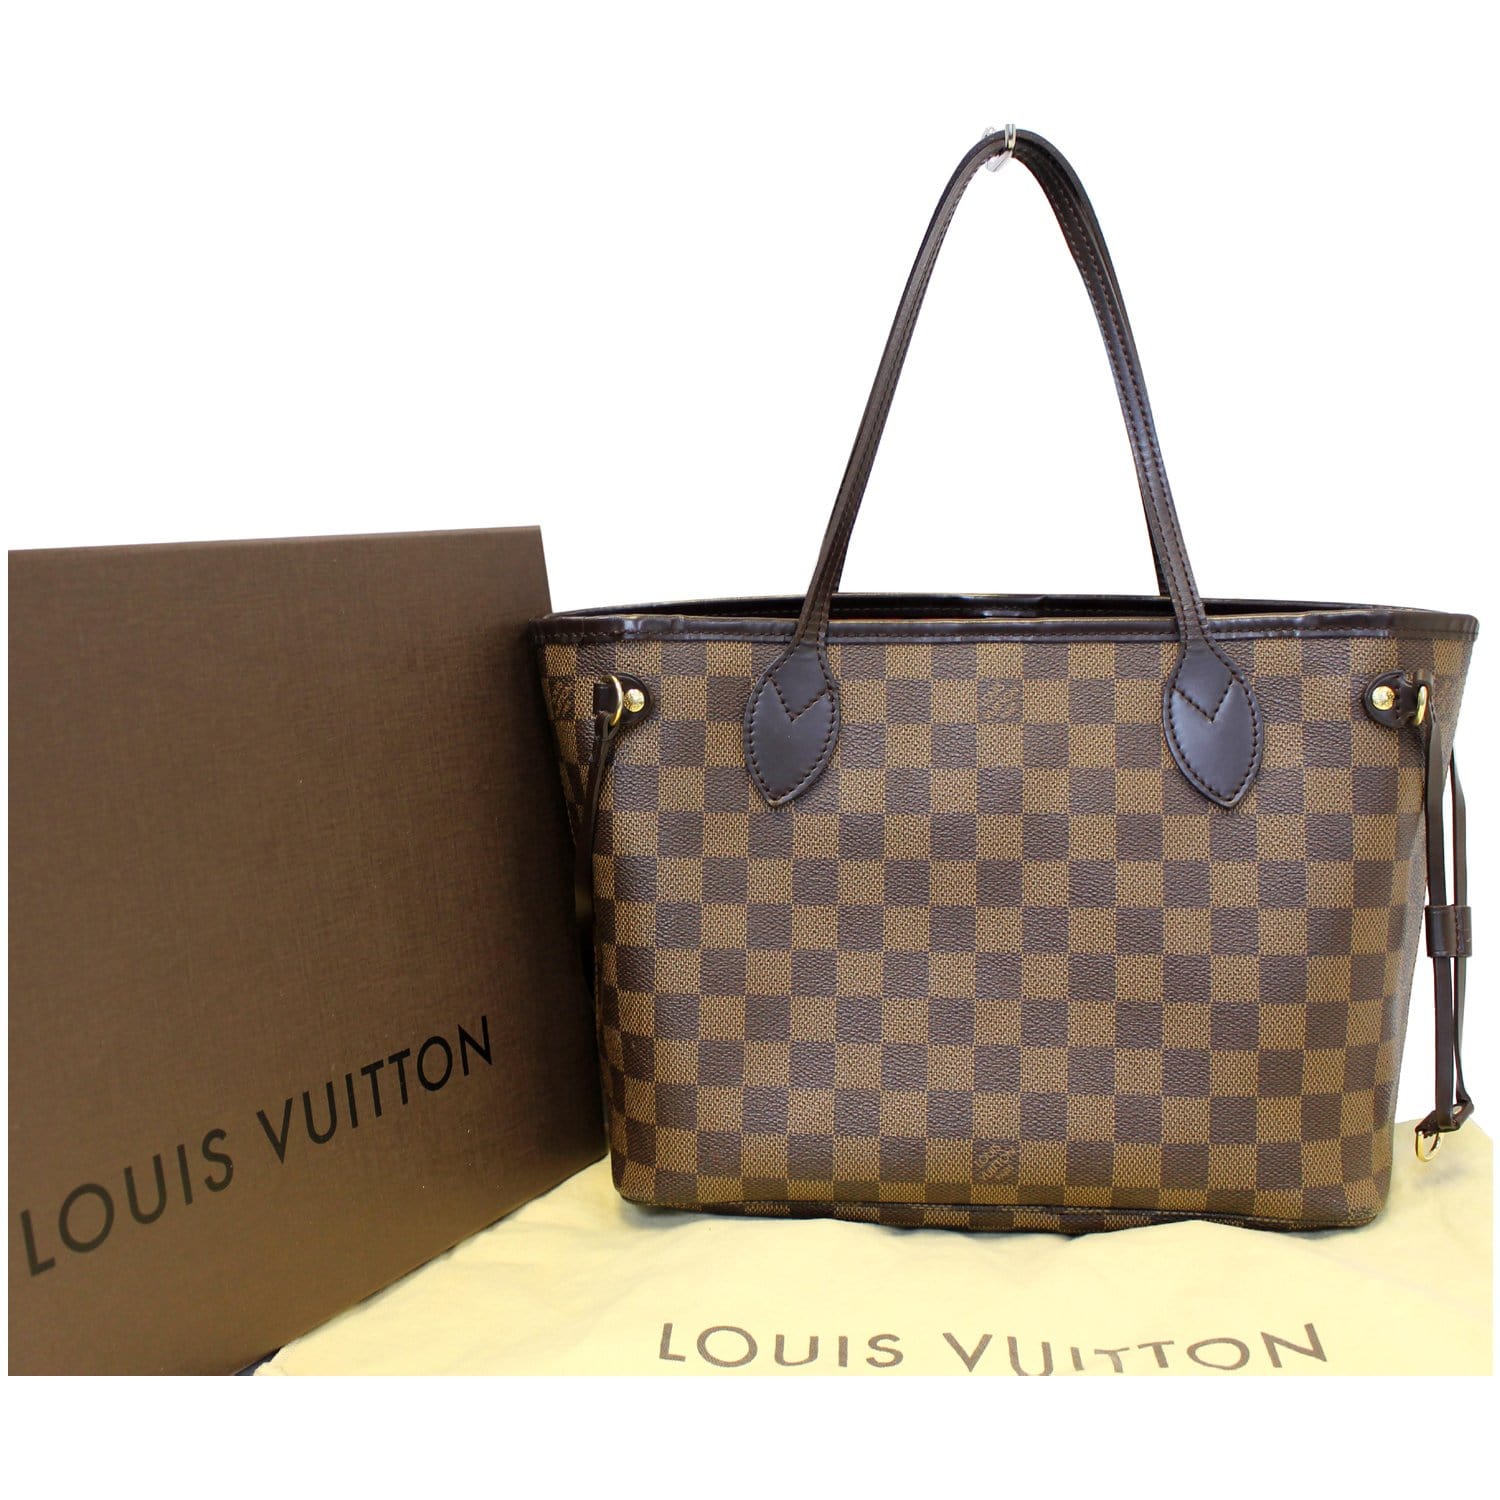 My Louis Vuitton NEVERFULL pm in Damier Ebene